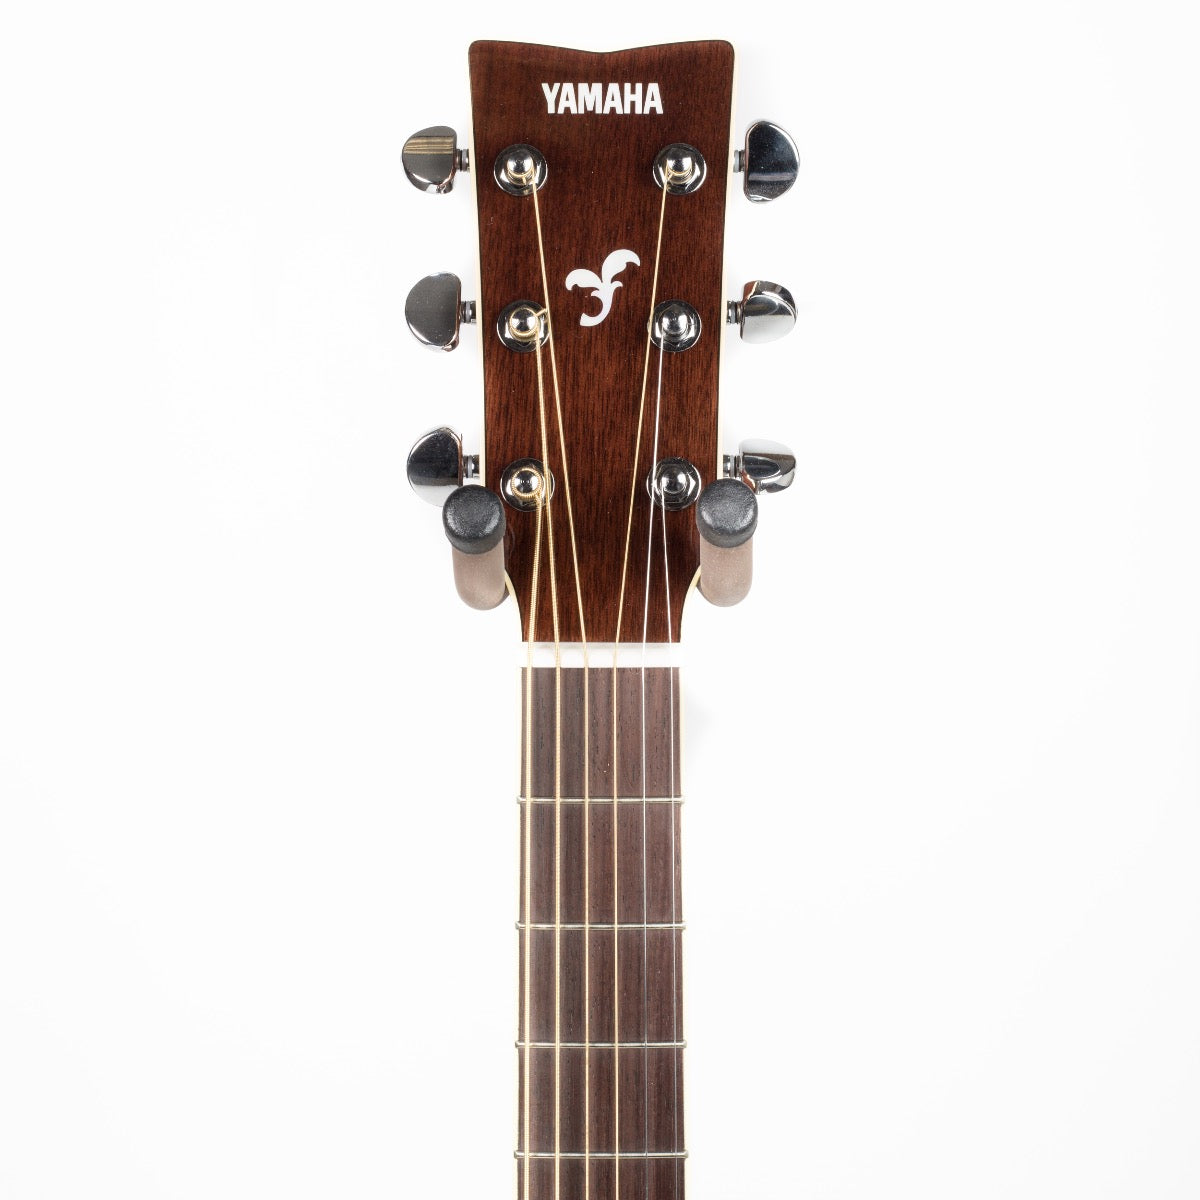 Yamaha FSX830C Concert Cutaway Acoustic Electric Guitar, Brown Sunburst